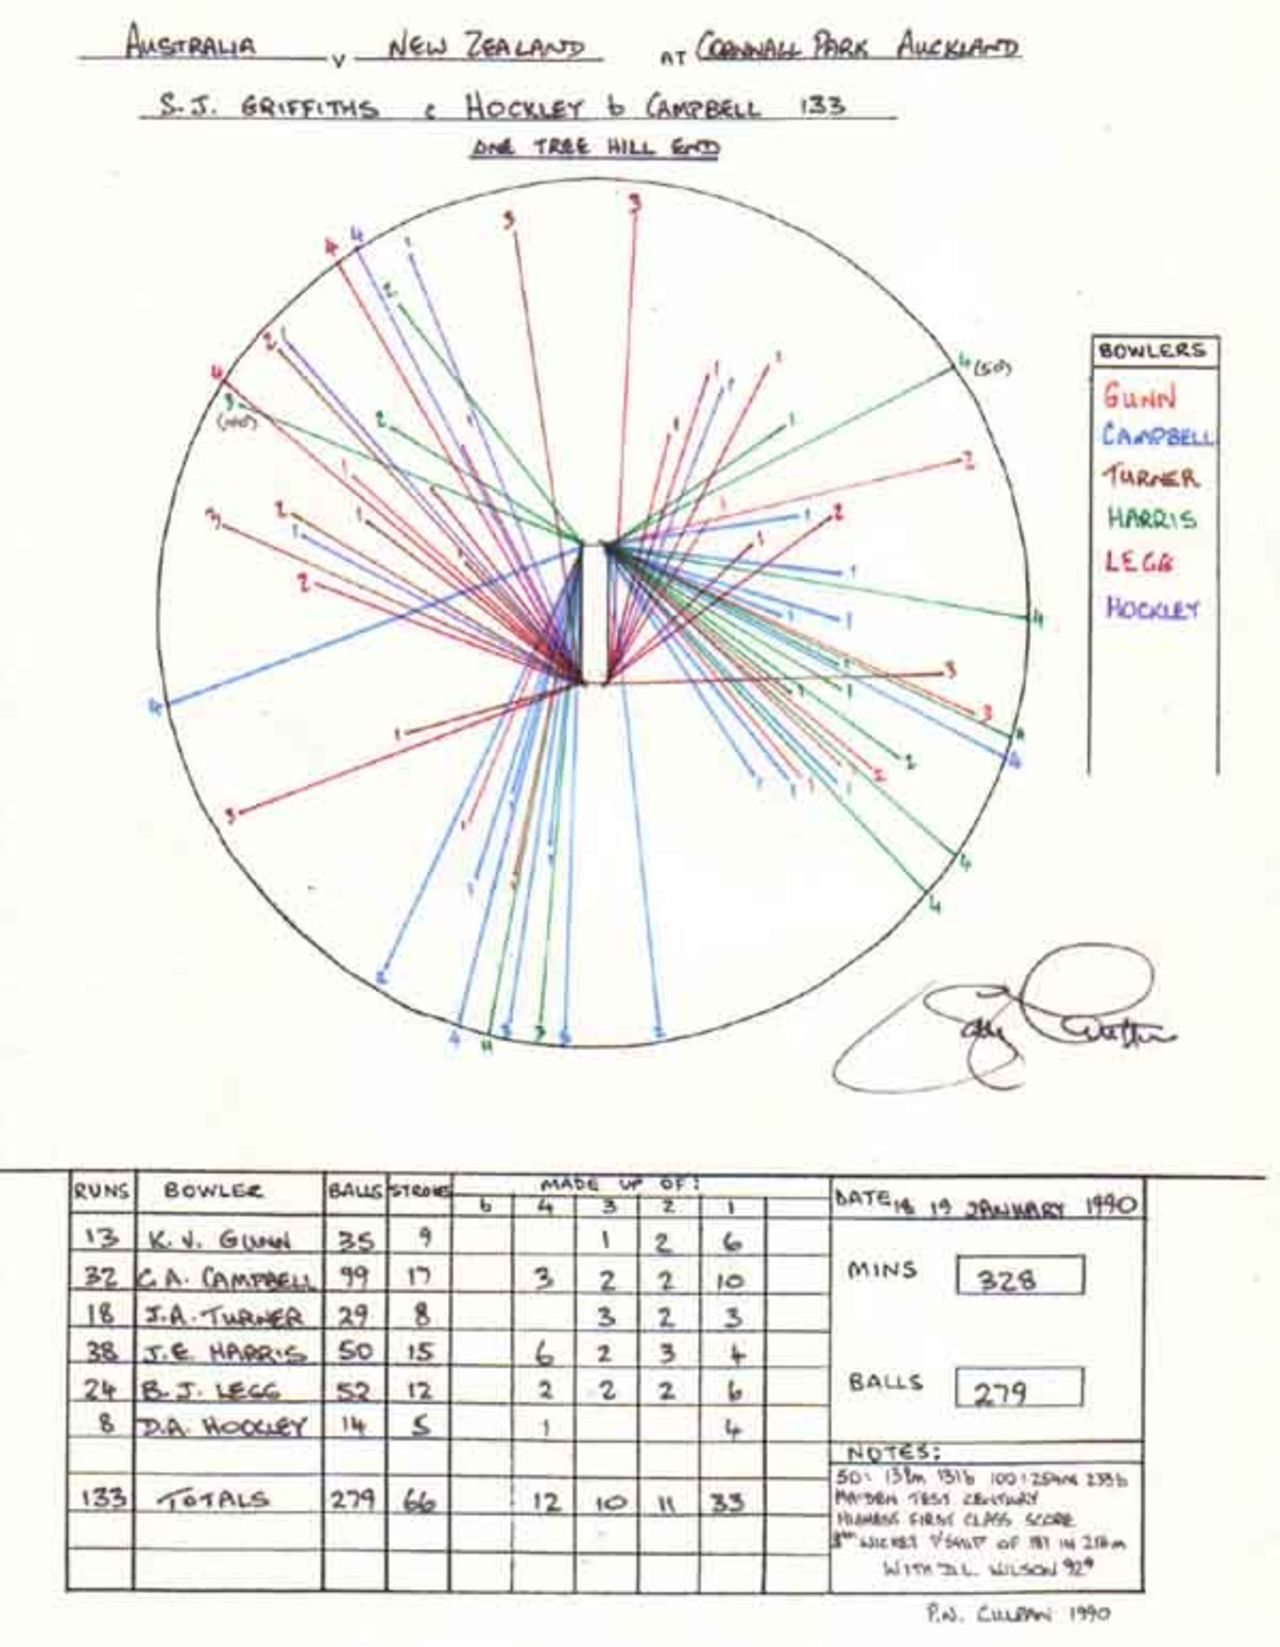 Wagon Wheel of Sally Griffiths 133 v New Zealand Women, Cornwall Park Auckland 18-19 January 1990